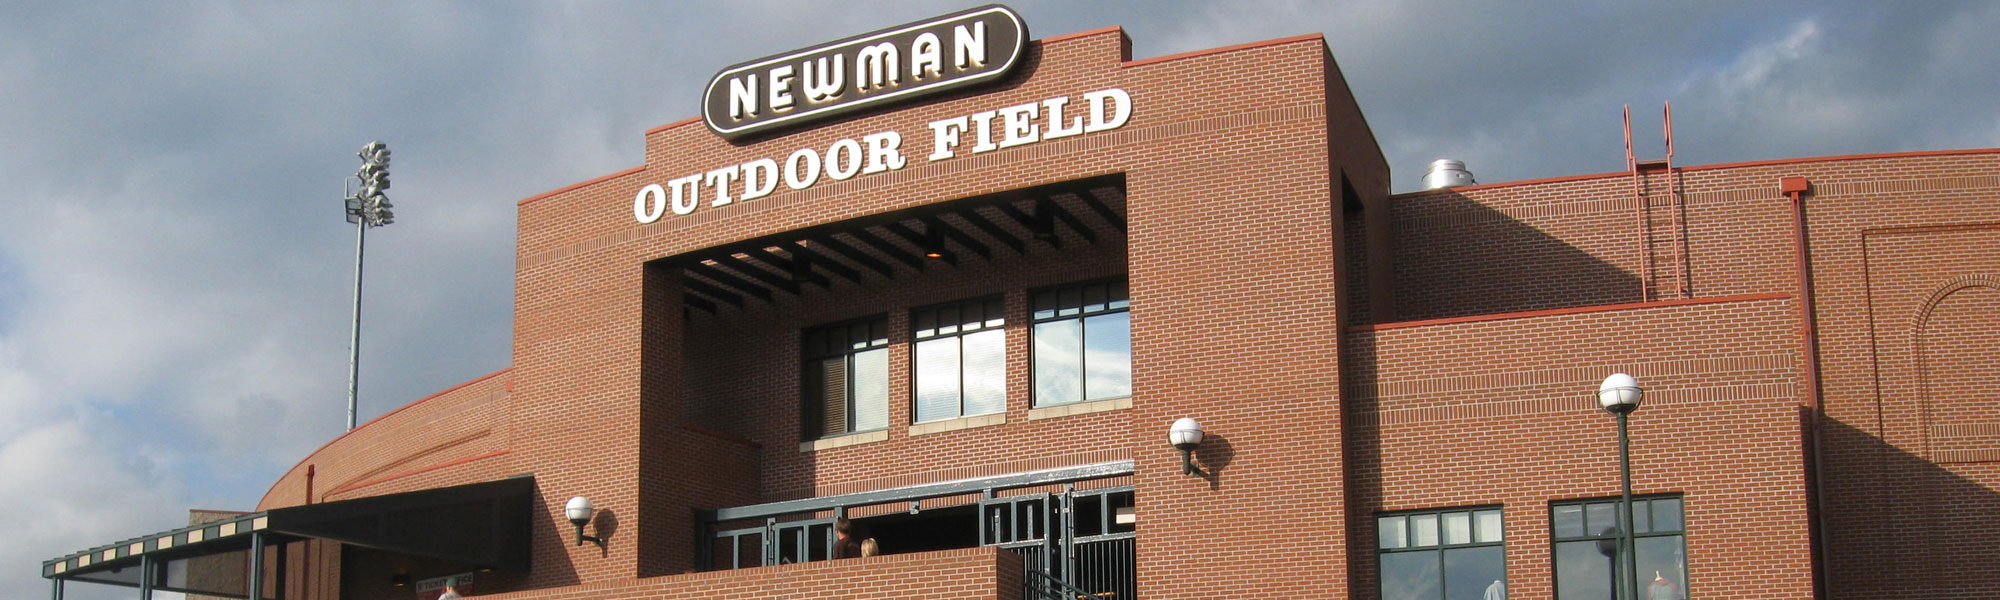 Redhawks Newman Outdoor Field Fargo